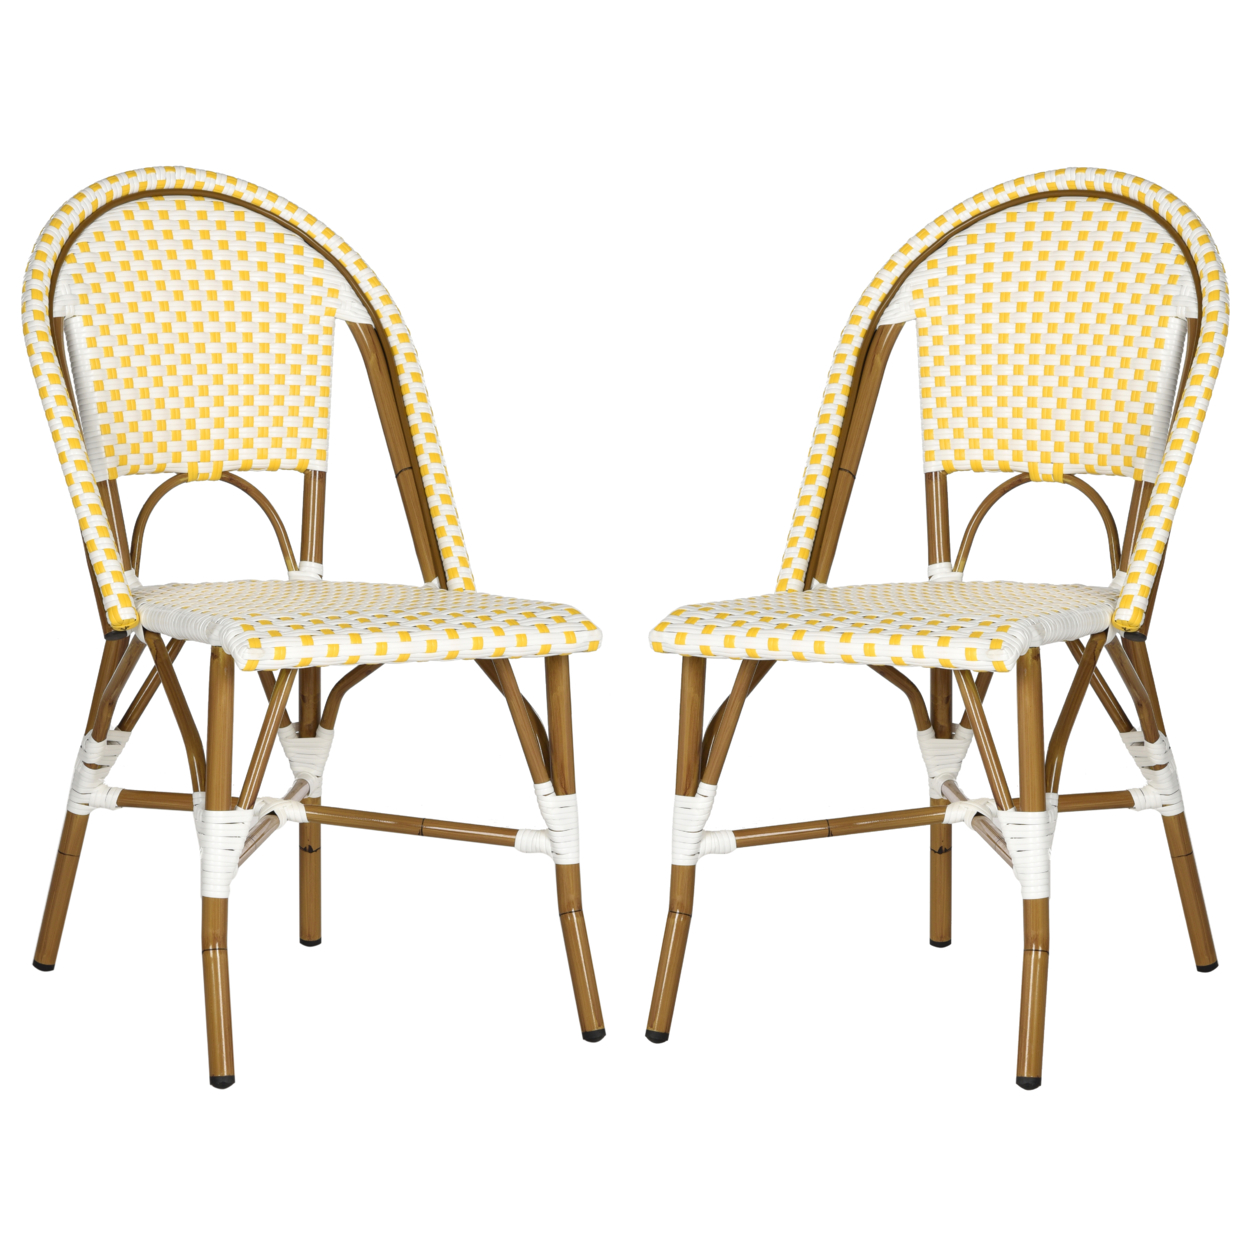 SAFAVIEH Outdoor Collection Salcha Bistro Side Chair Yellow/White/Light Brown